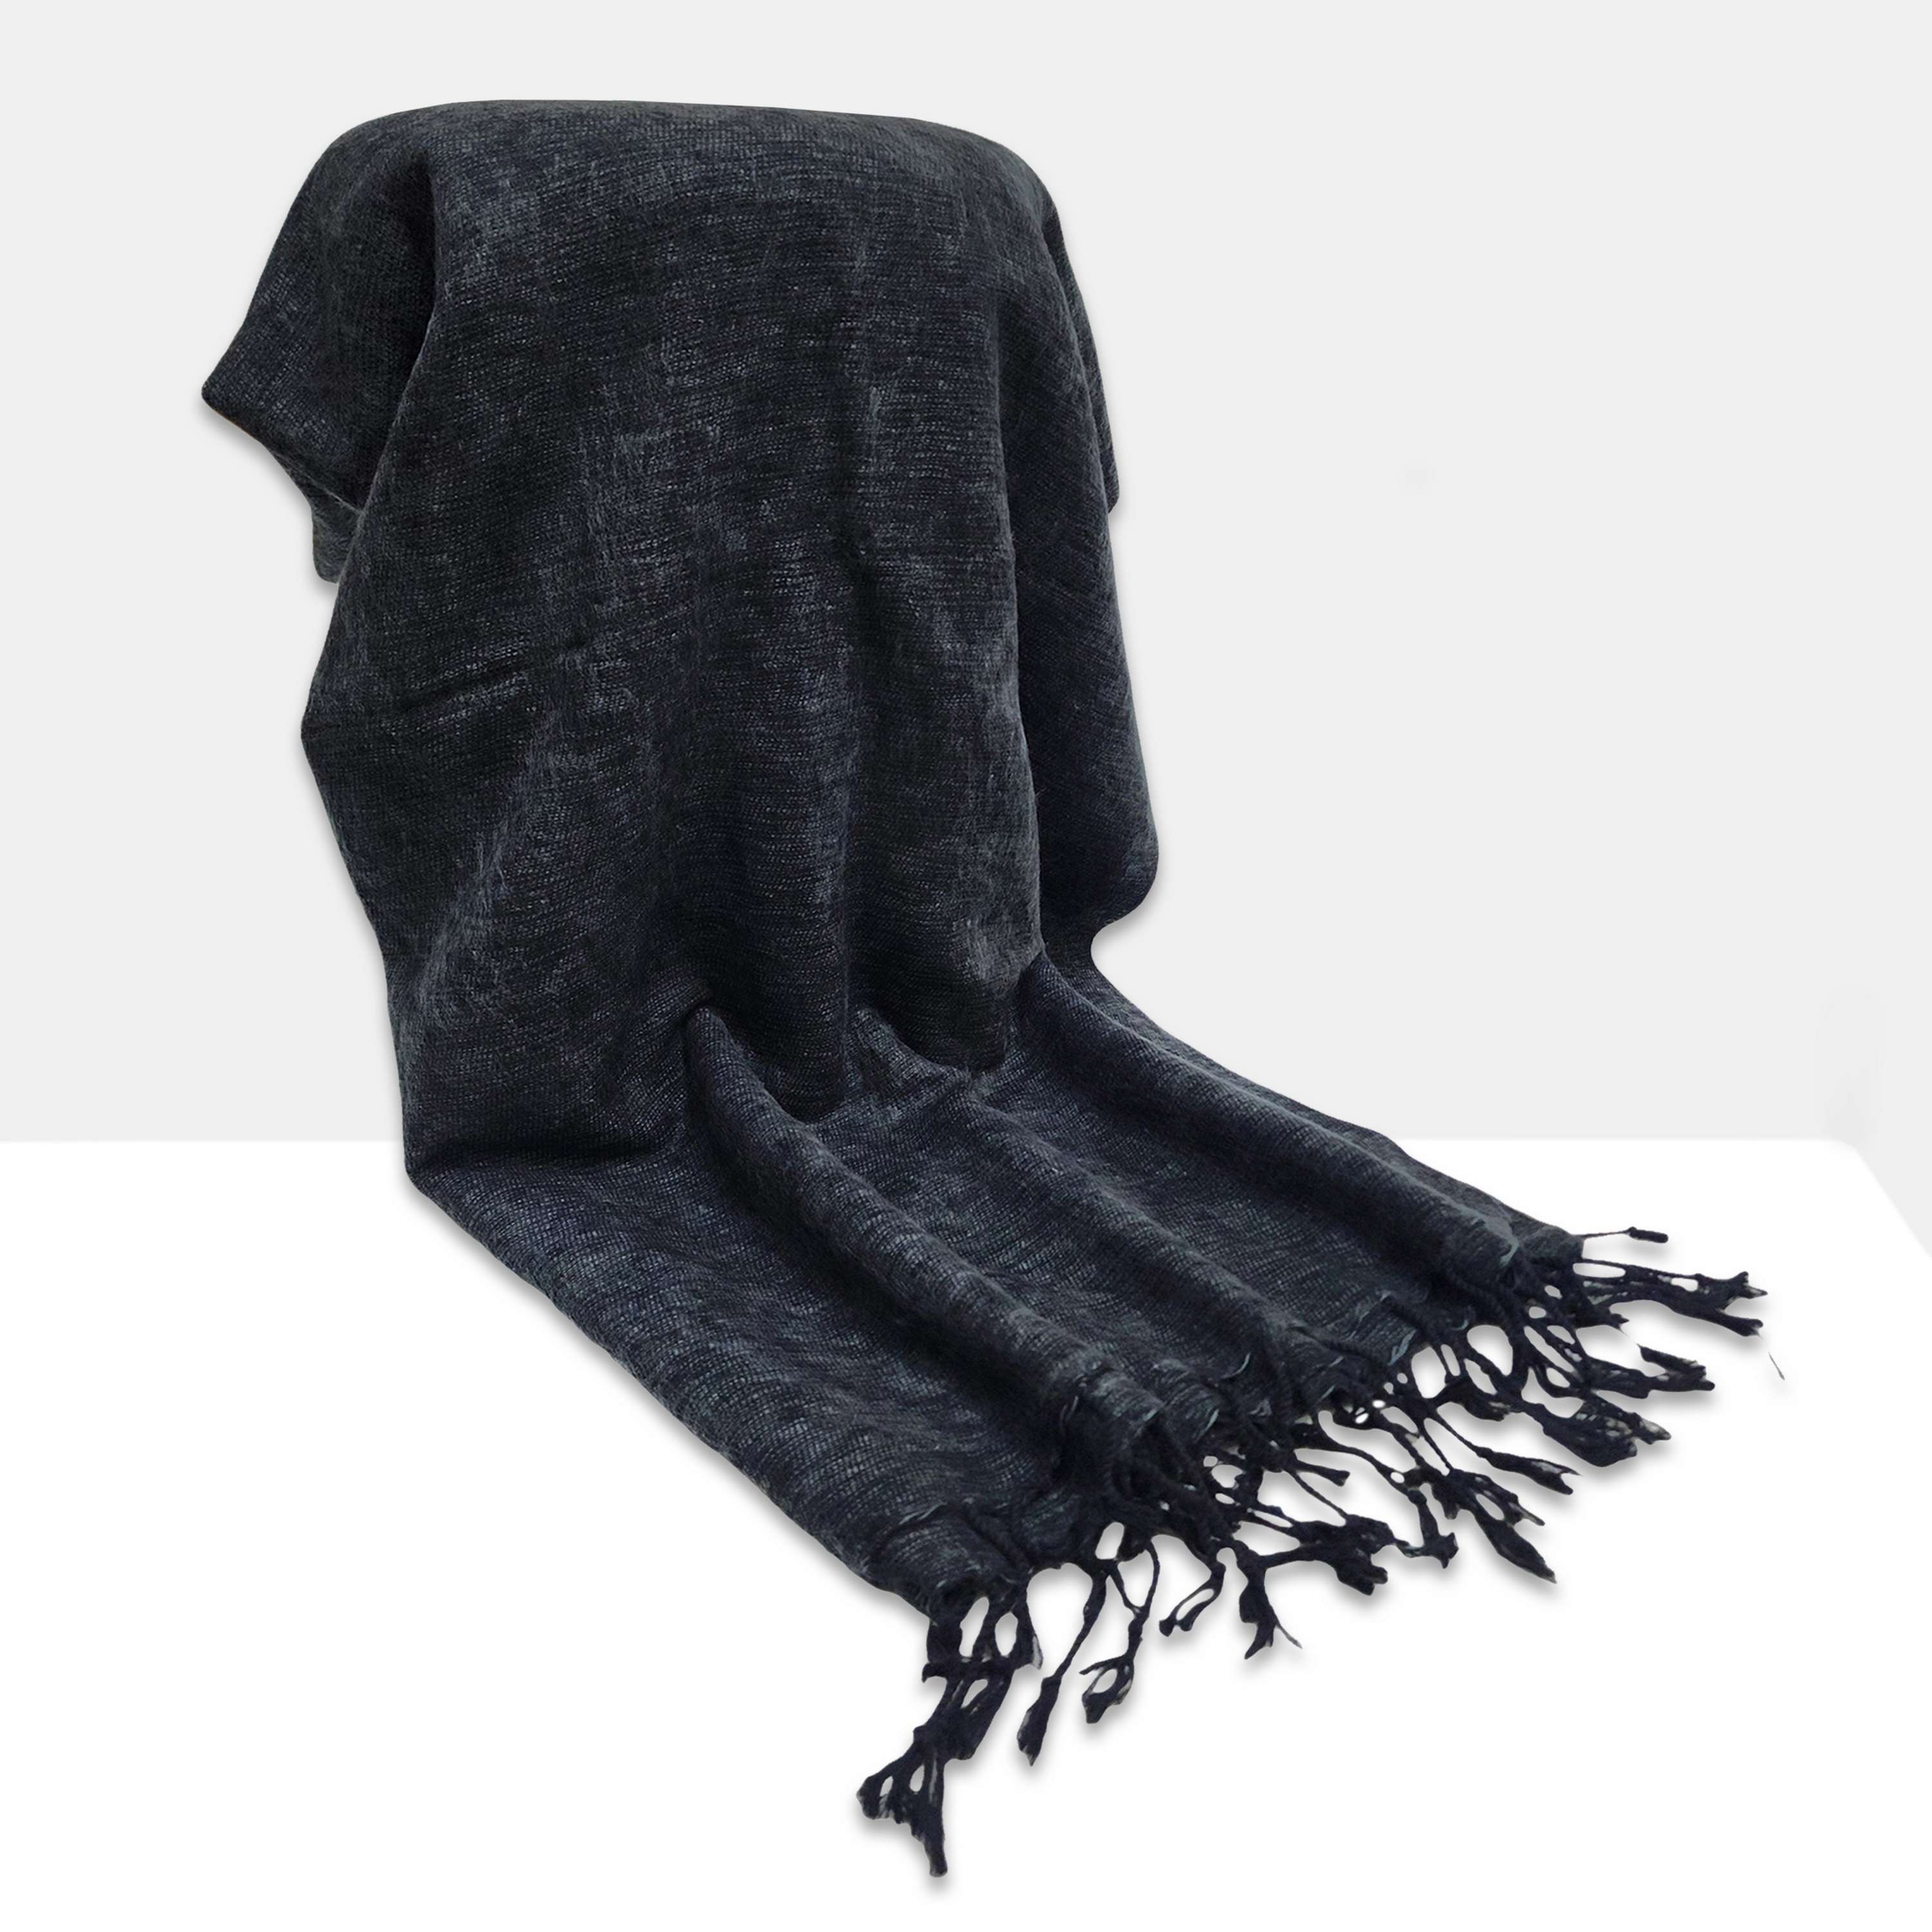 Yak Wool Blanket, Nepali Acrylic Hand Loom Blanket, Color dark Gray